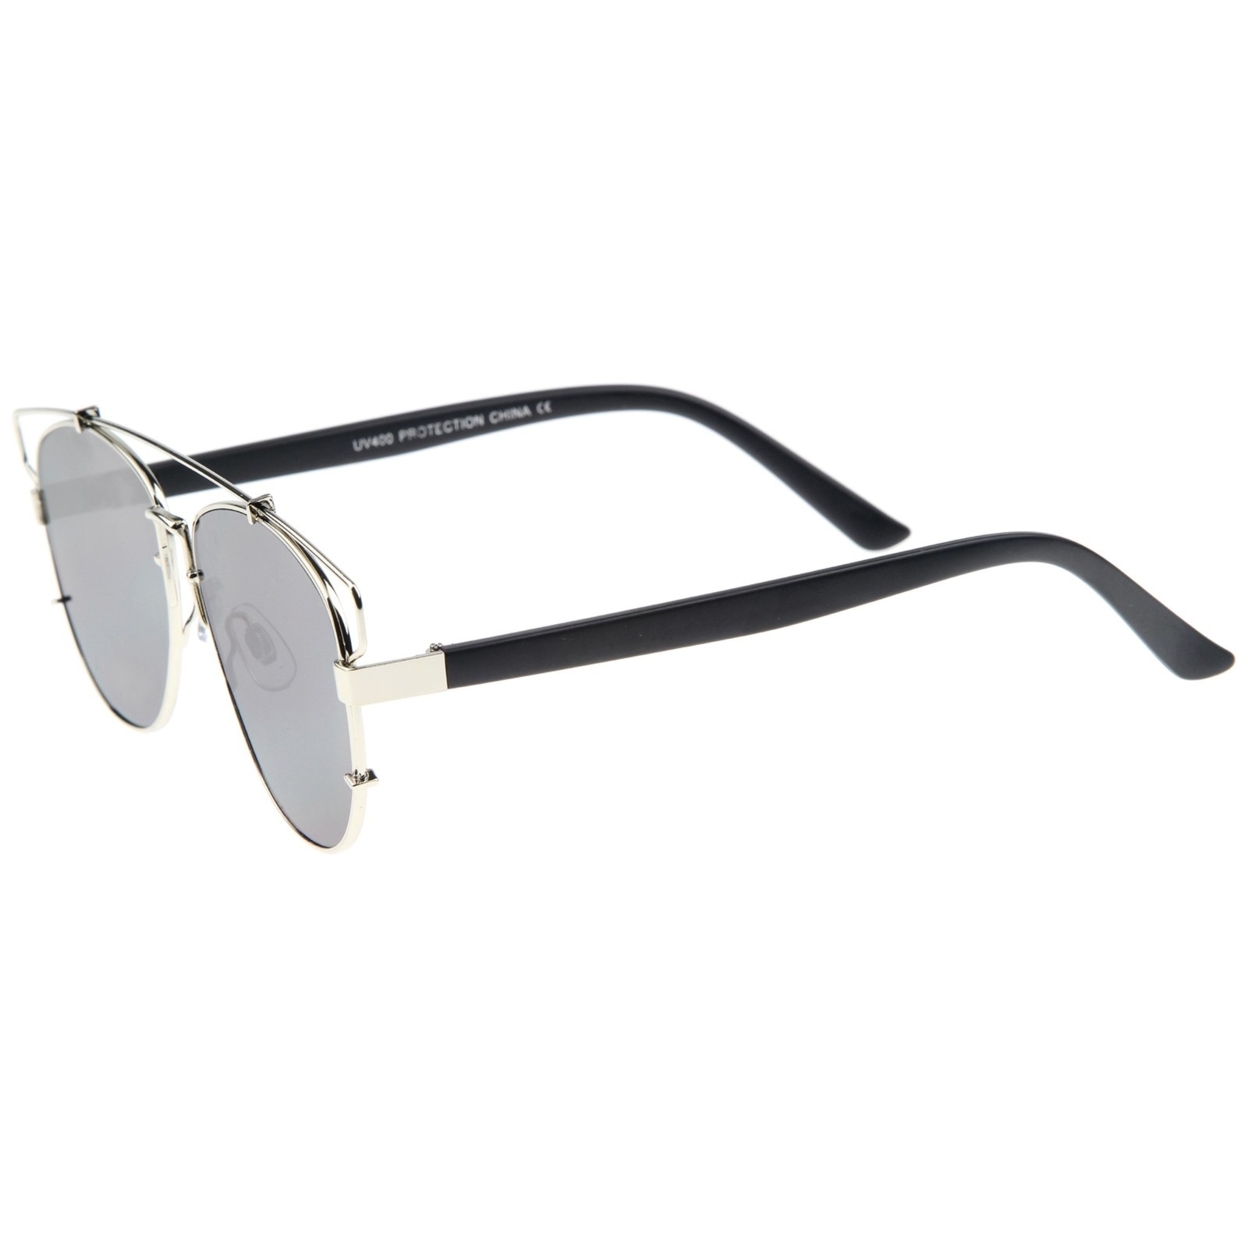 Modern Fashion Full Metal Crossbar Technologic Flat Lens Aviator Sunglasses 54mm - Gold-Tortoise / Green Sunglasses